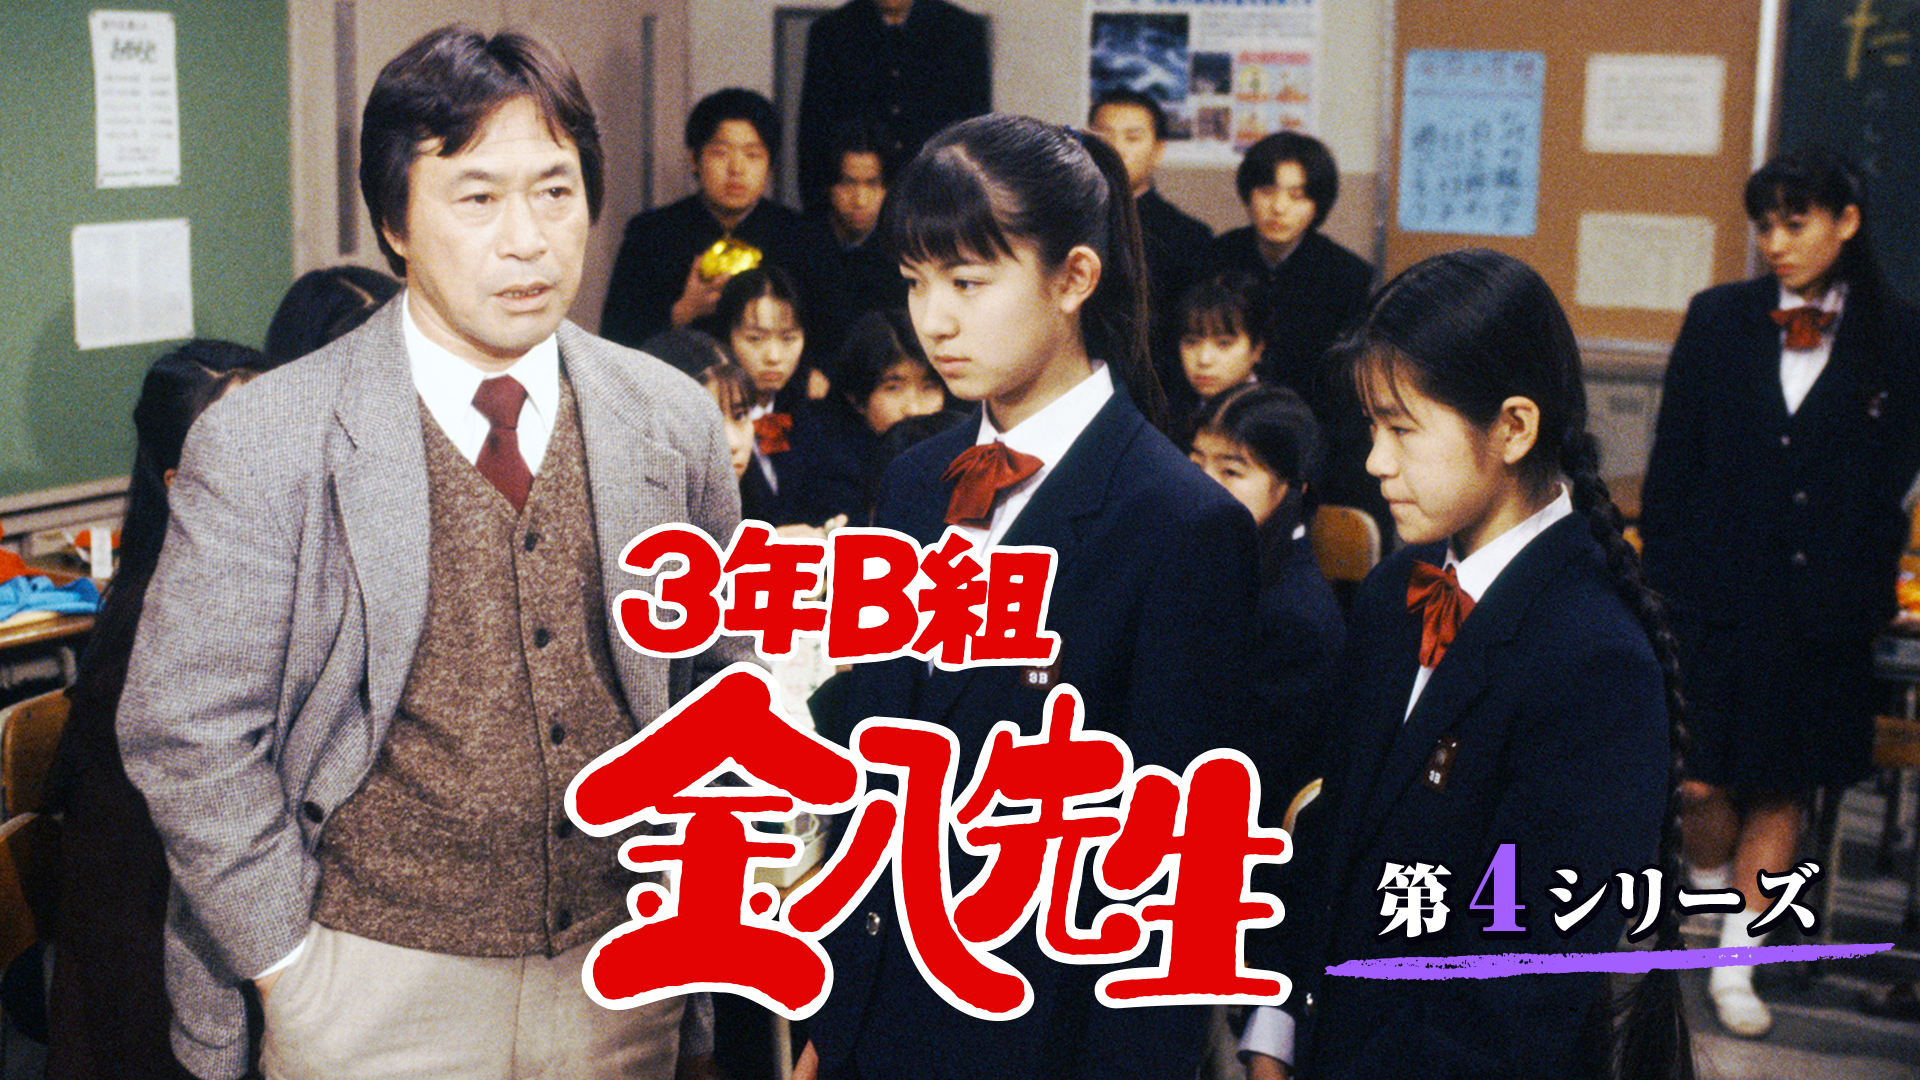 3年B組金八先生(第4シリーズ)(国内ドラマ / 1995) - 動画配信 | U-NEXT 